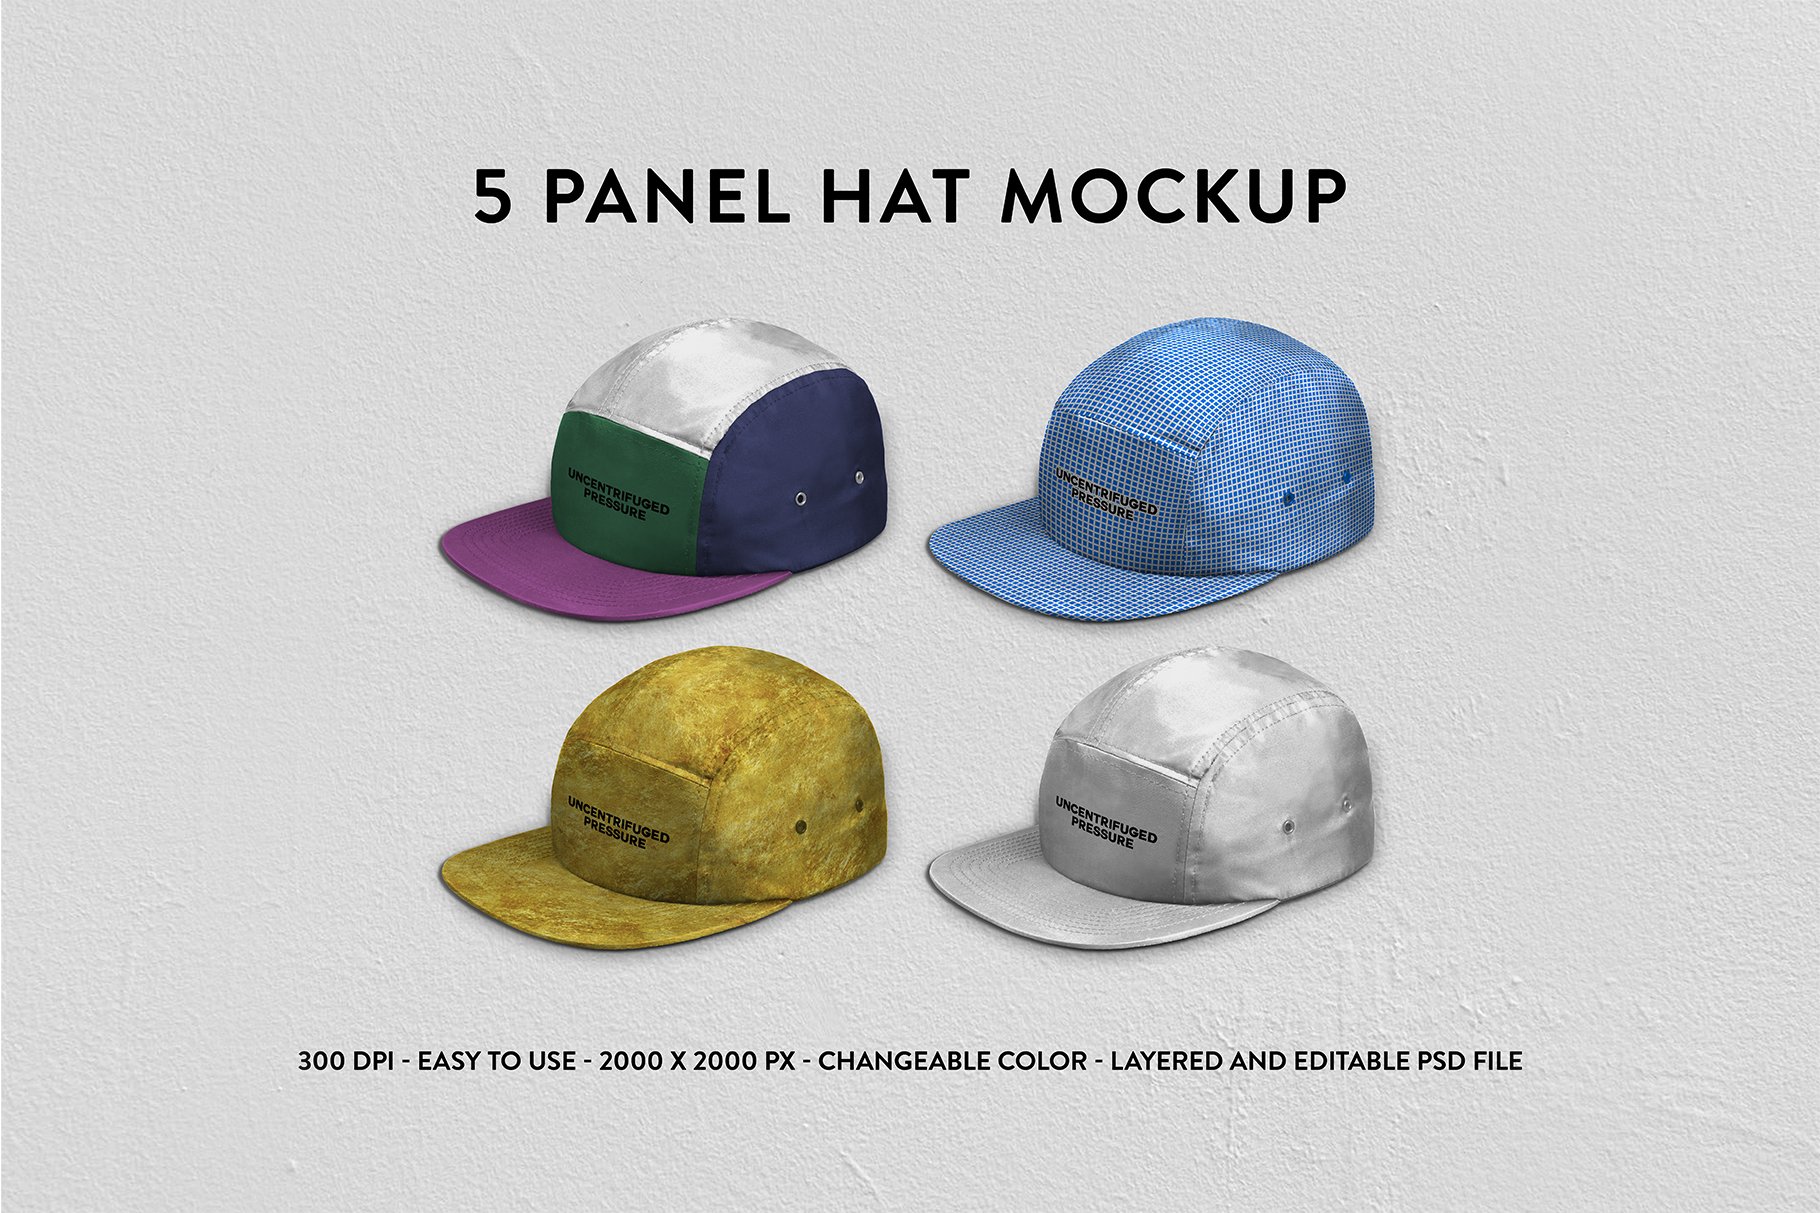 Five Panels Mockup cover image.